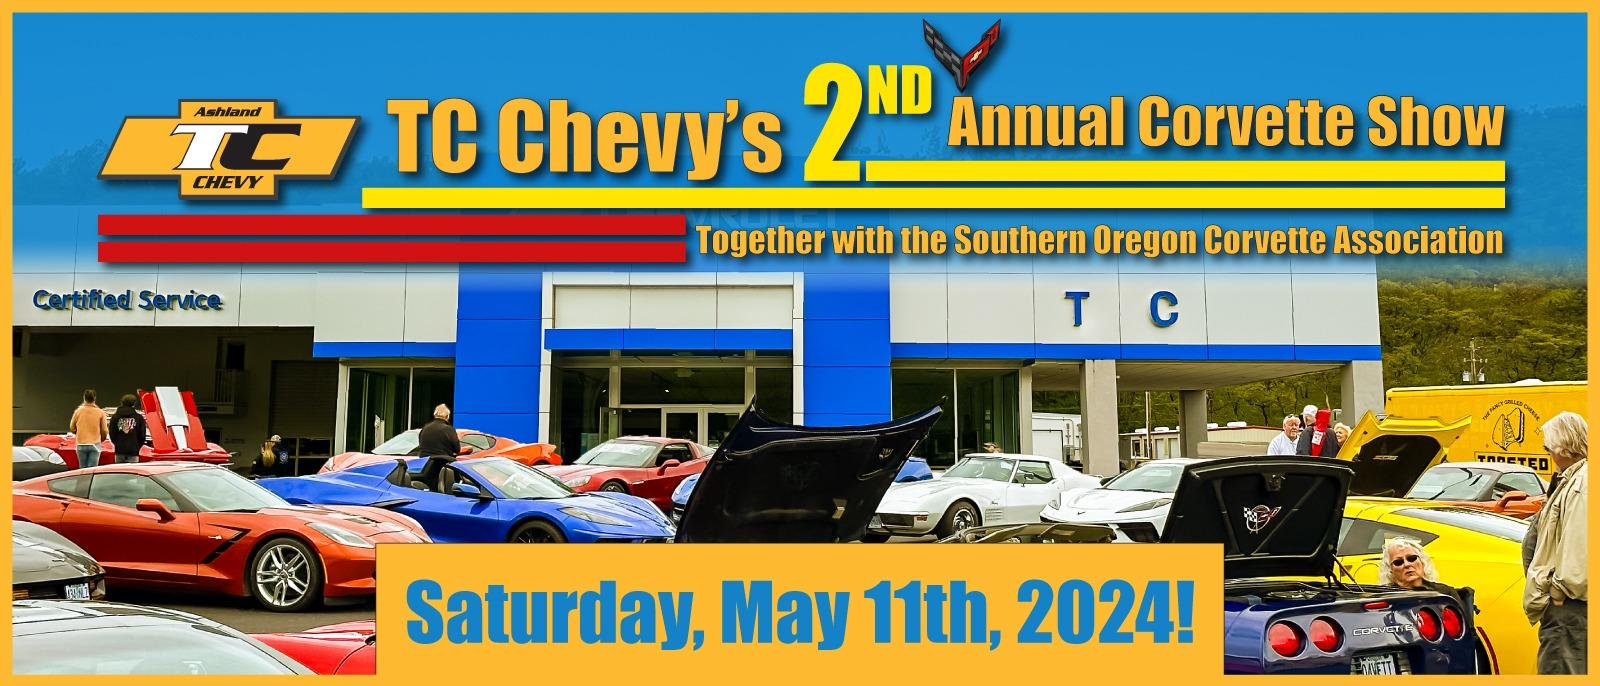 TC Chevy's 2nd Annual Corvette Show